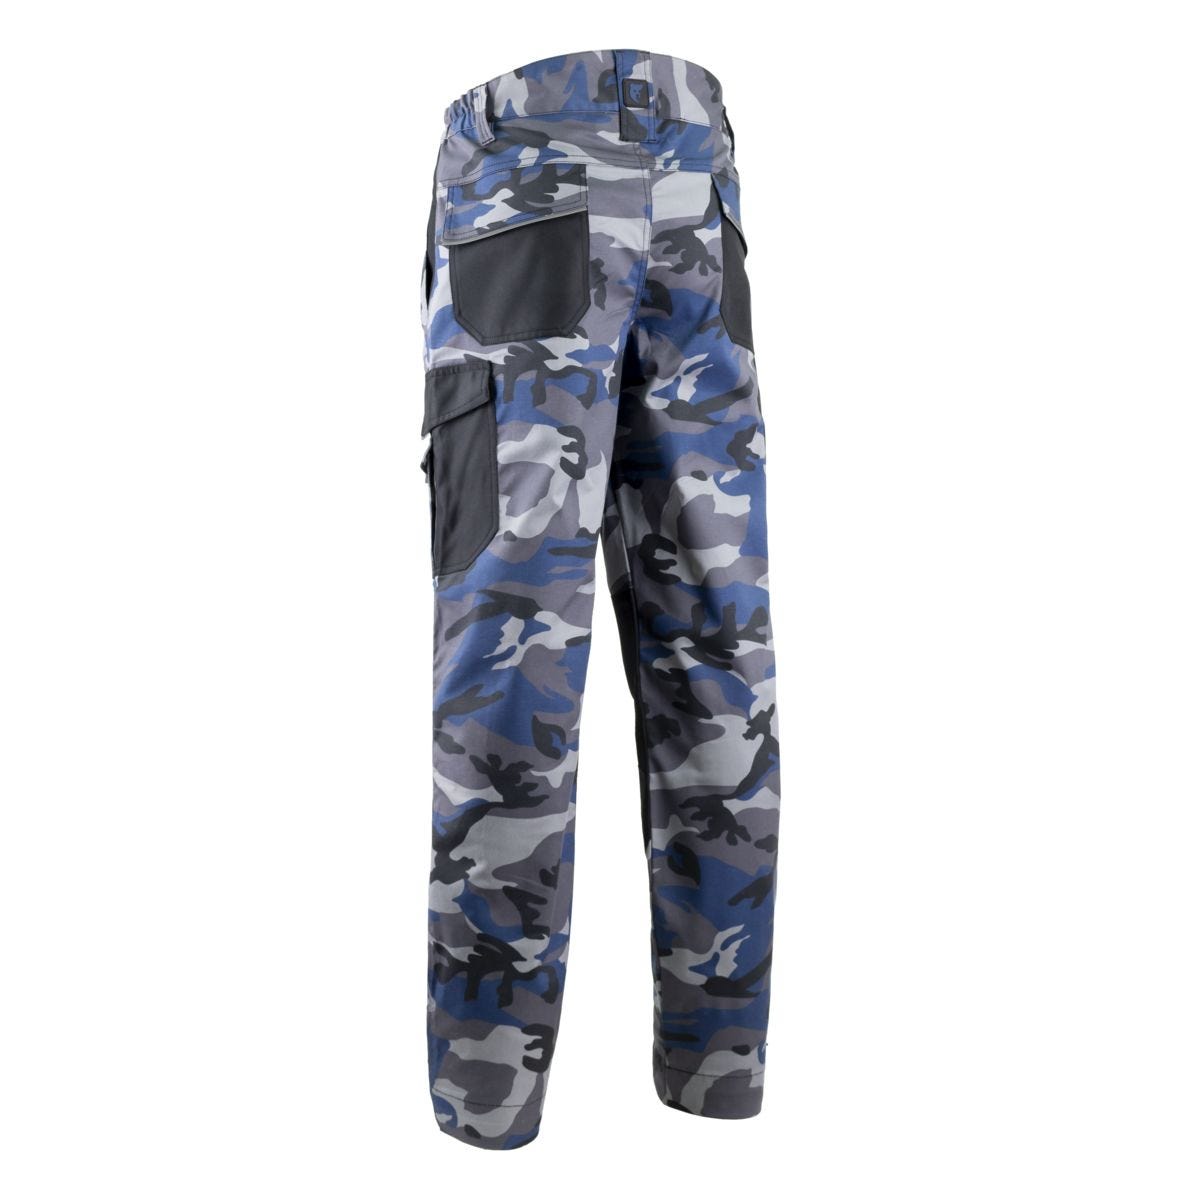 Pantalon KAMMO Camouflage Bleu-Gris - COVERGUARD - Taille 2XL 1